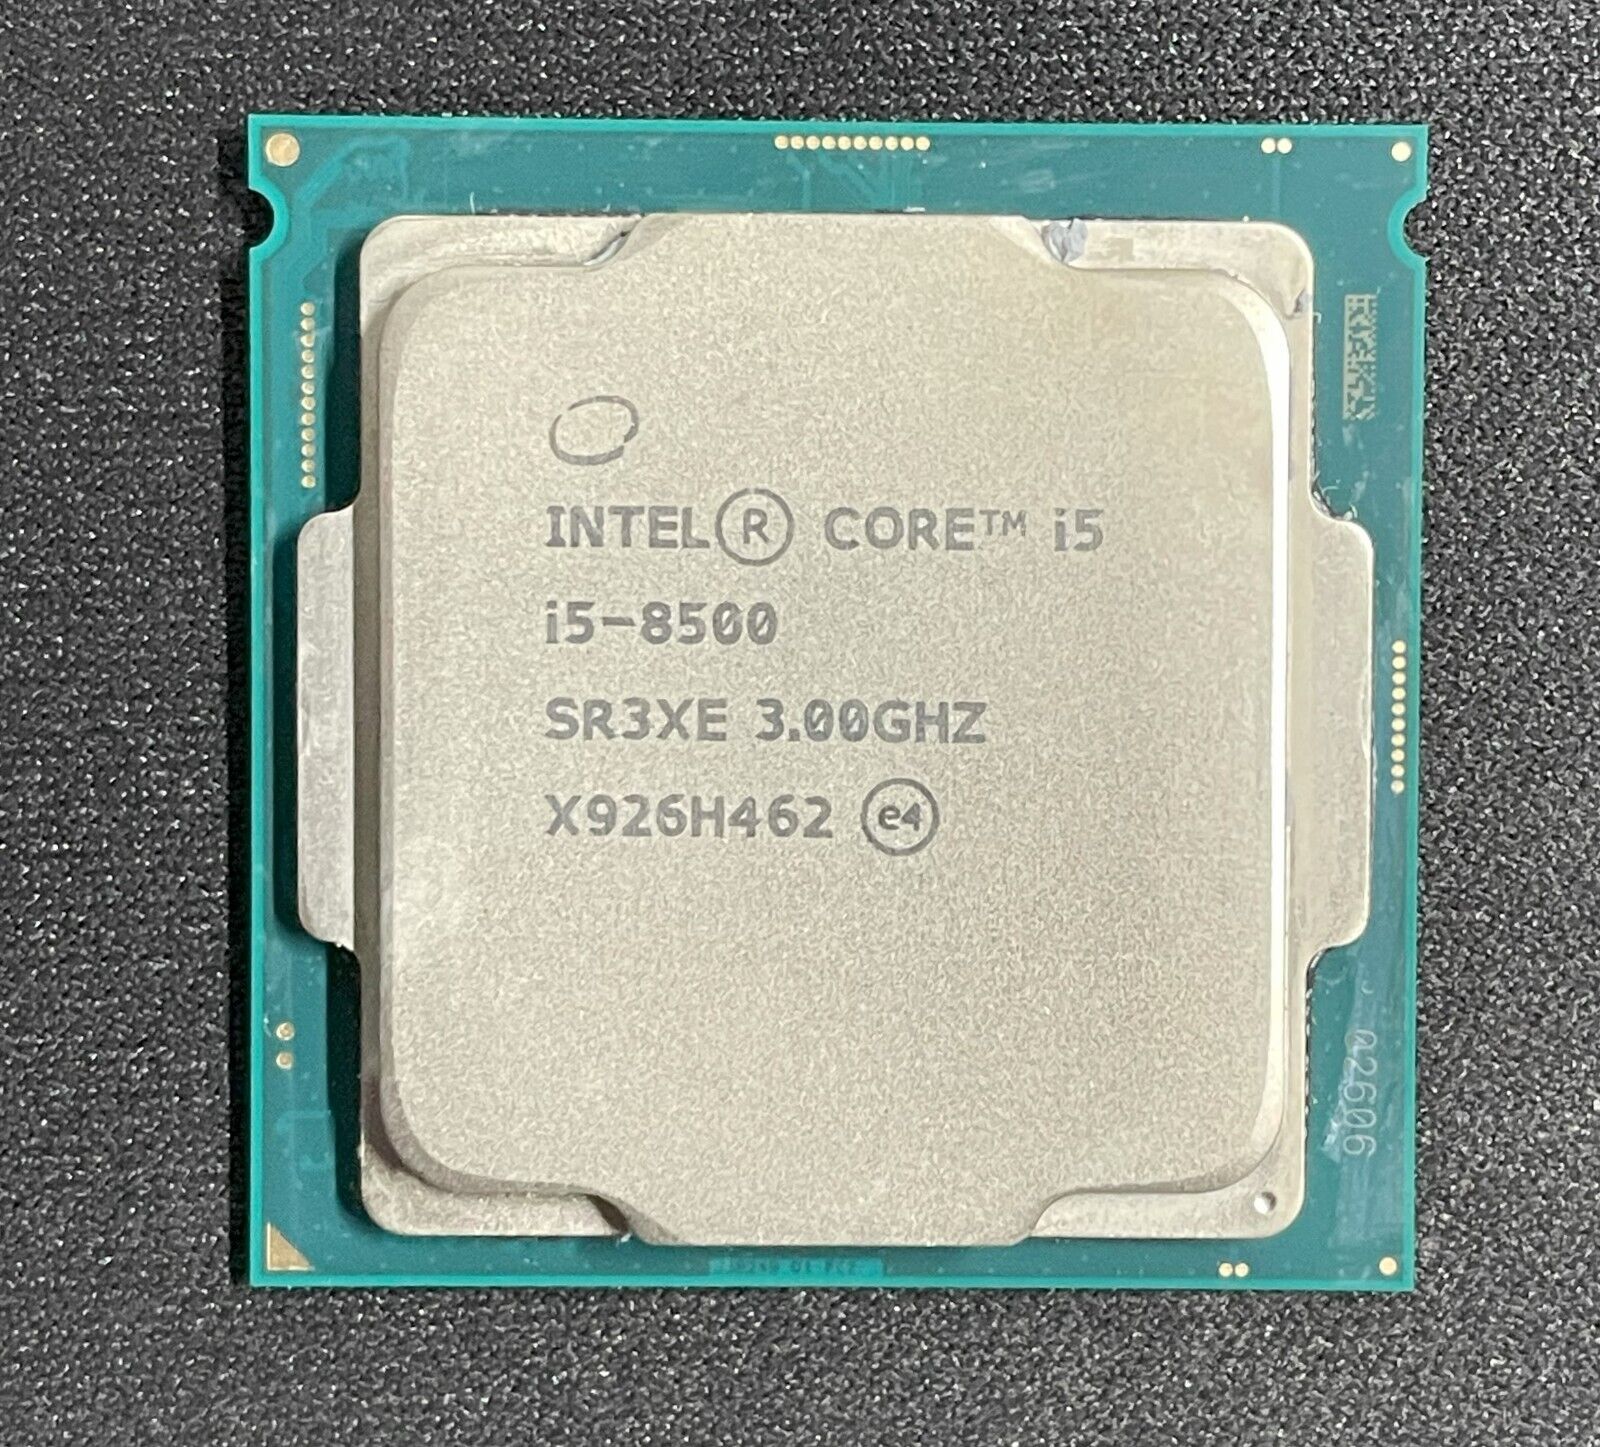 Intel Core i5-8500 SR3XE Processor 9M 3.00 GHz up to 4.10 GHz, Socket FCLGA1151